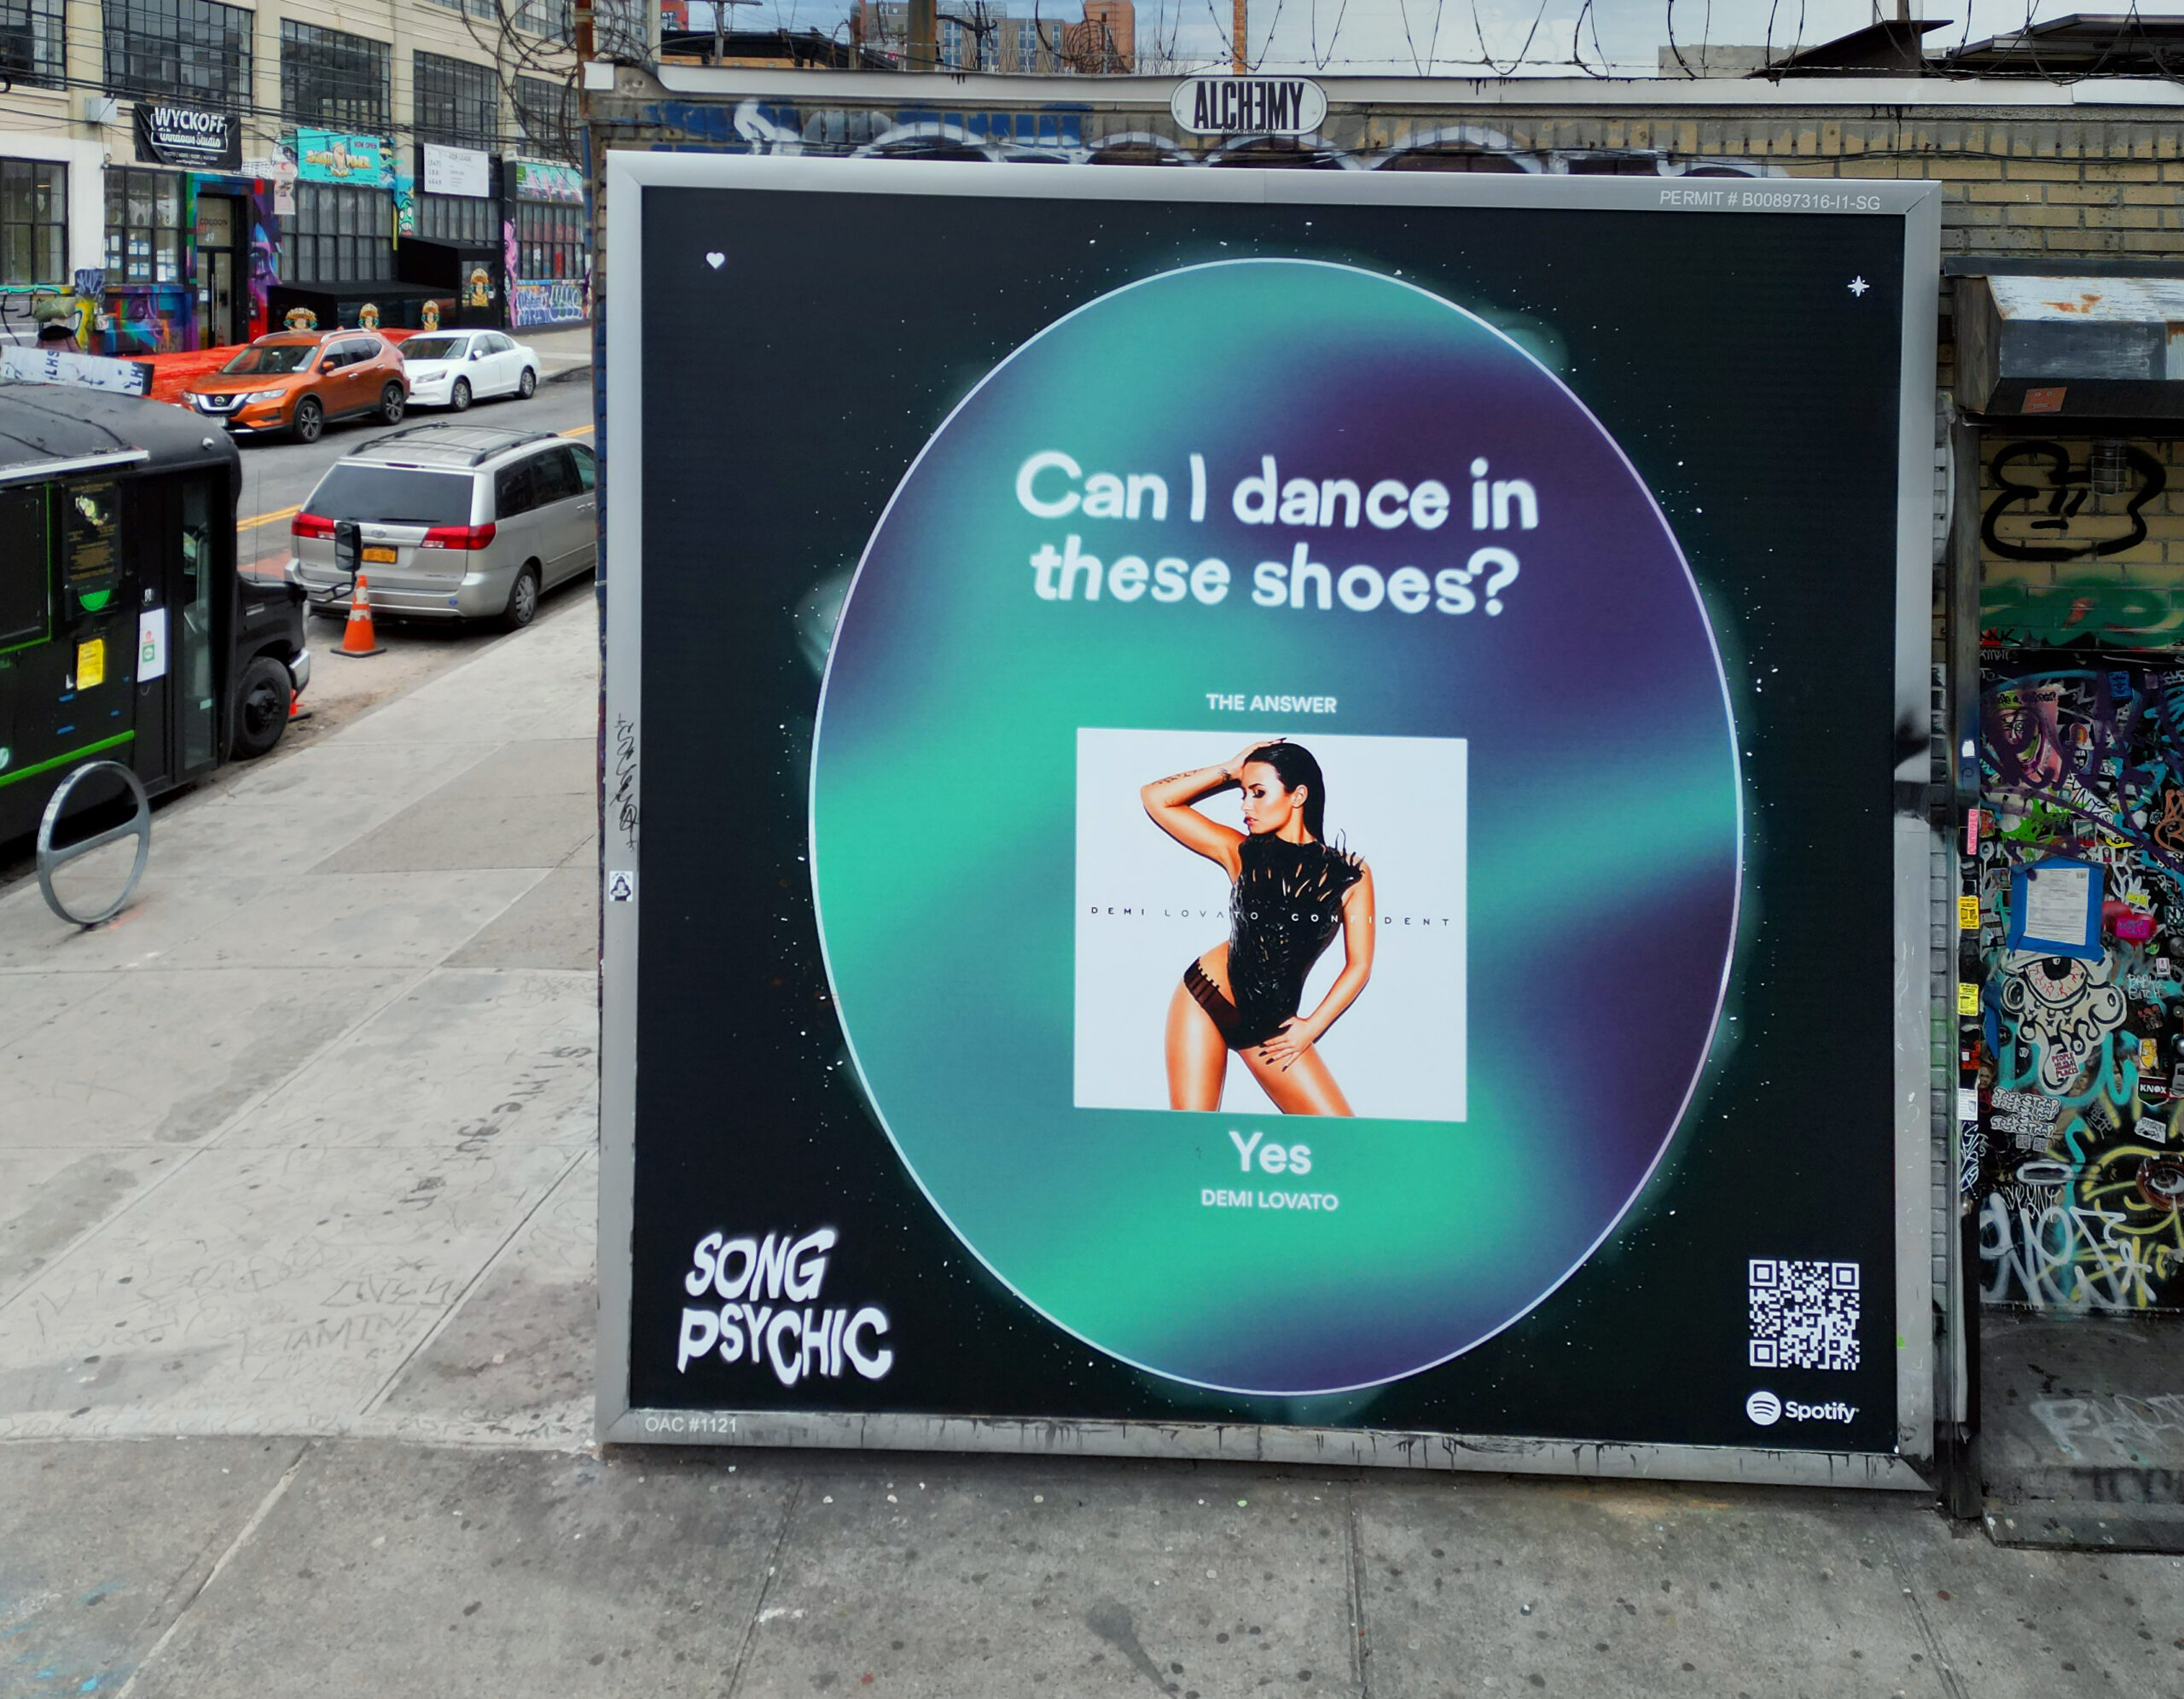 Spotify Demi Lovato Experiential Advertising QR Code Wild Posting NYC Brooklyn Bushwick Starr St